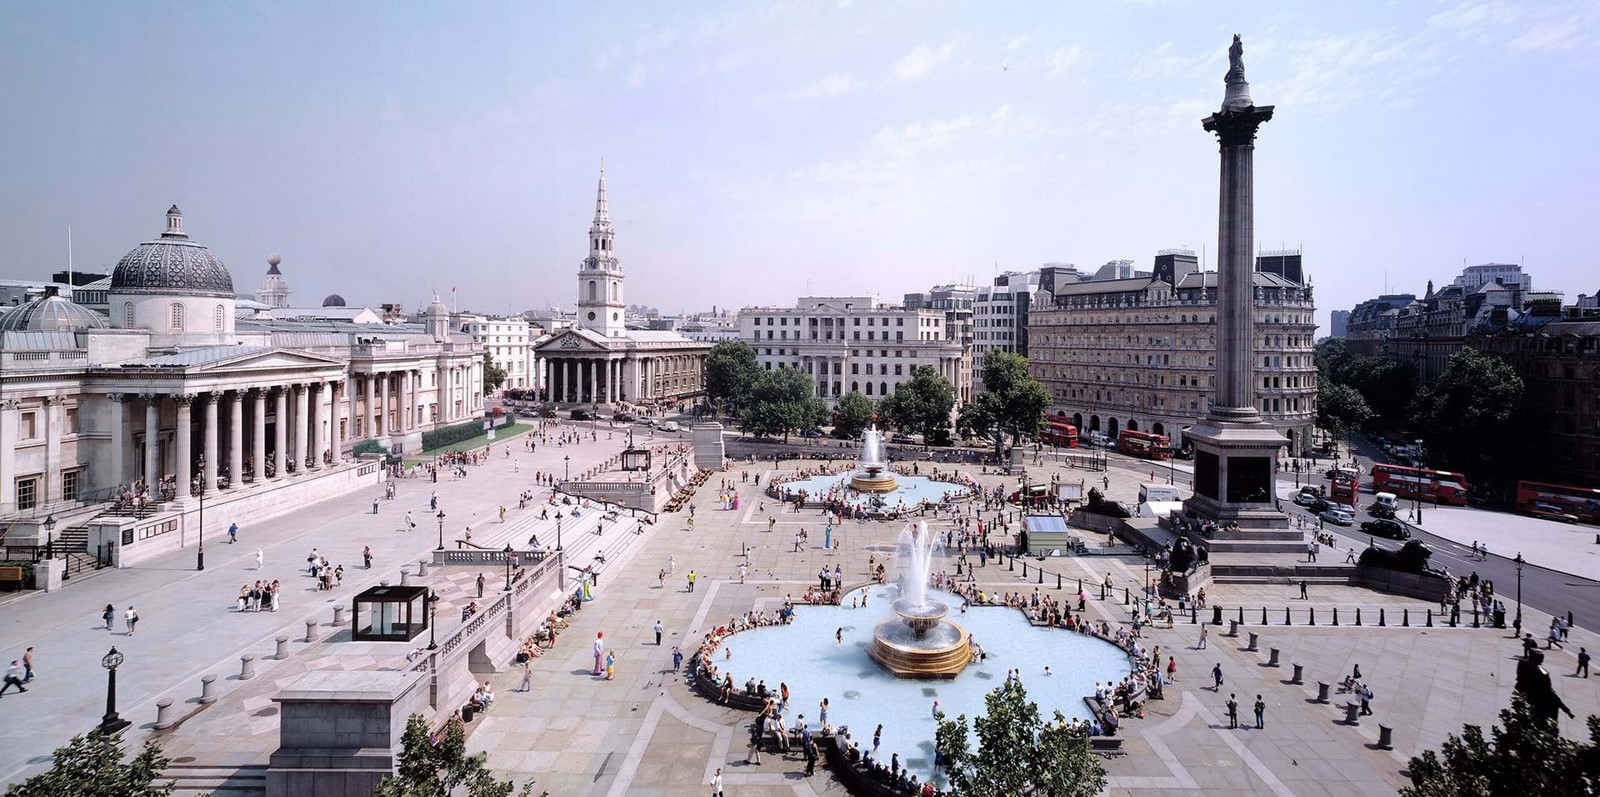 Trafalgar Square, London, England - Sheet2